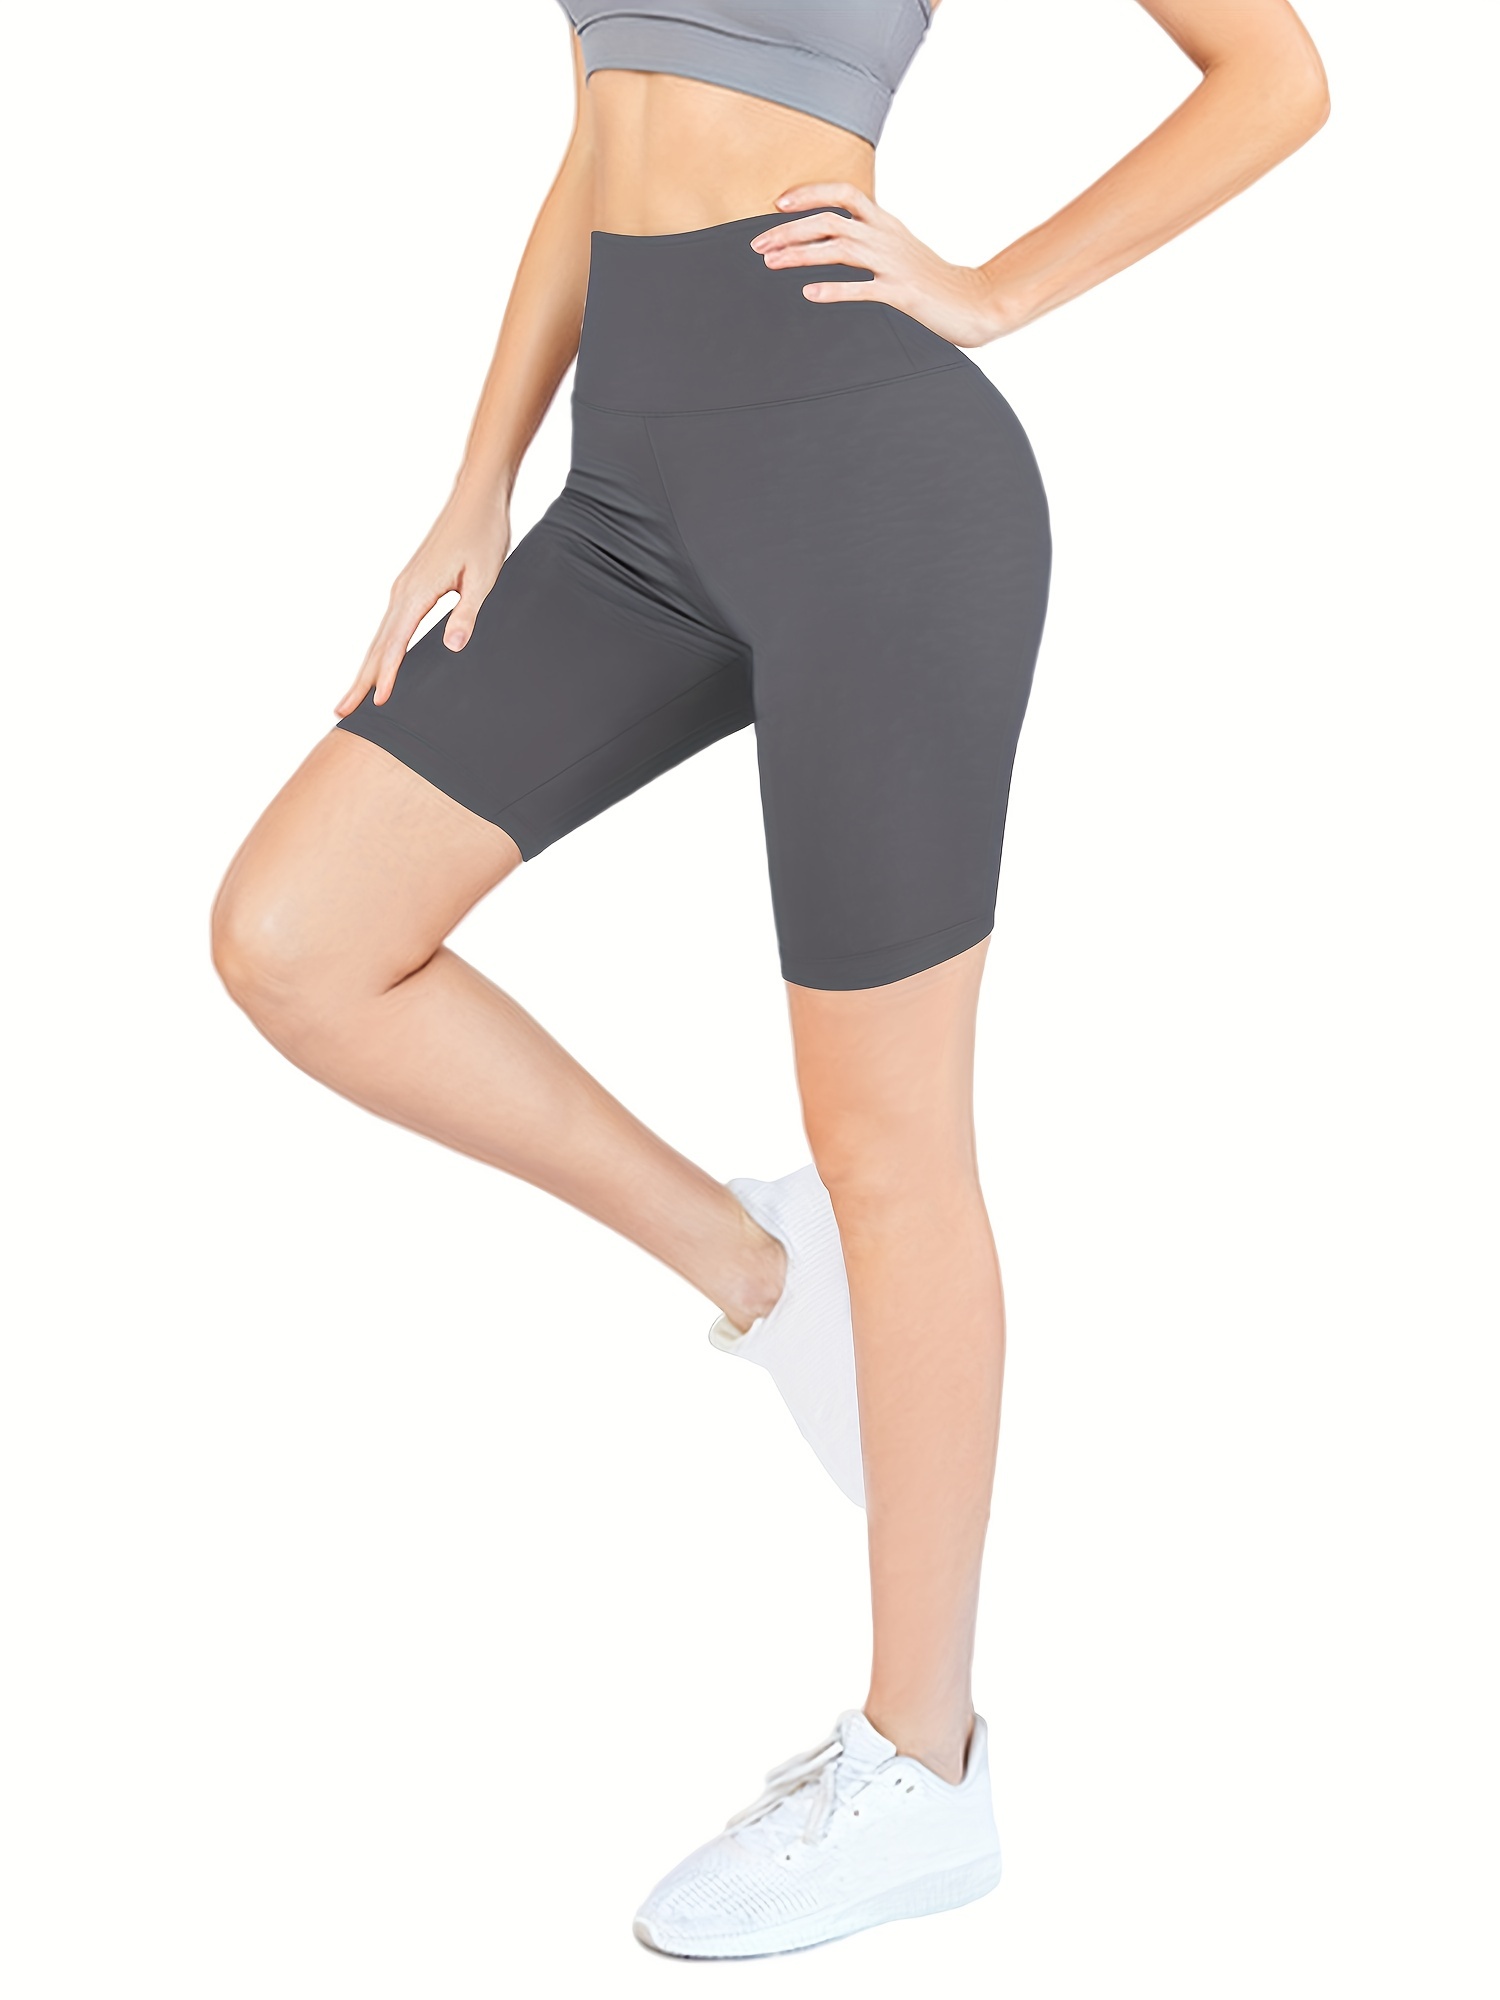 NexiEpoch Leggings con Forro Polar para Mujer - Pantalones de Yoga de  Invierno de Talle Alto Control